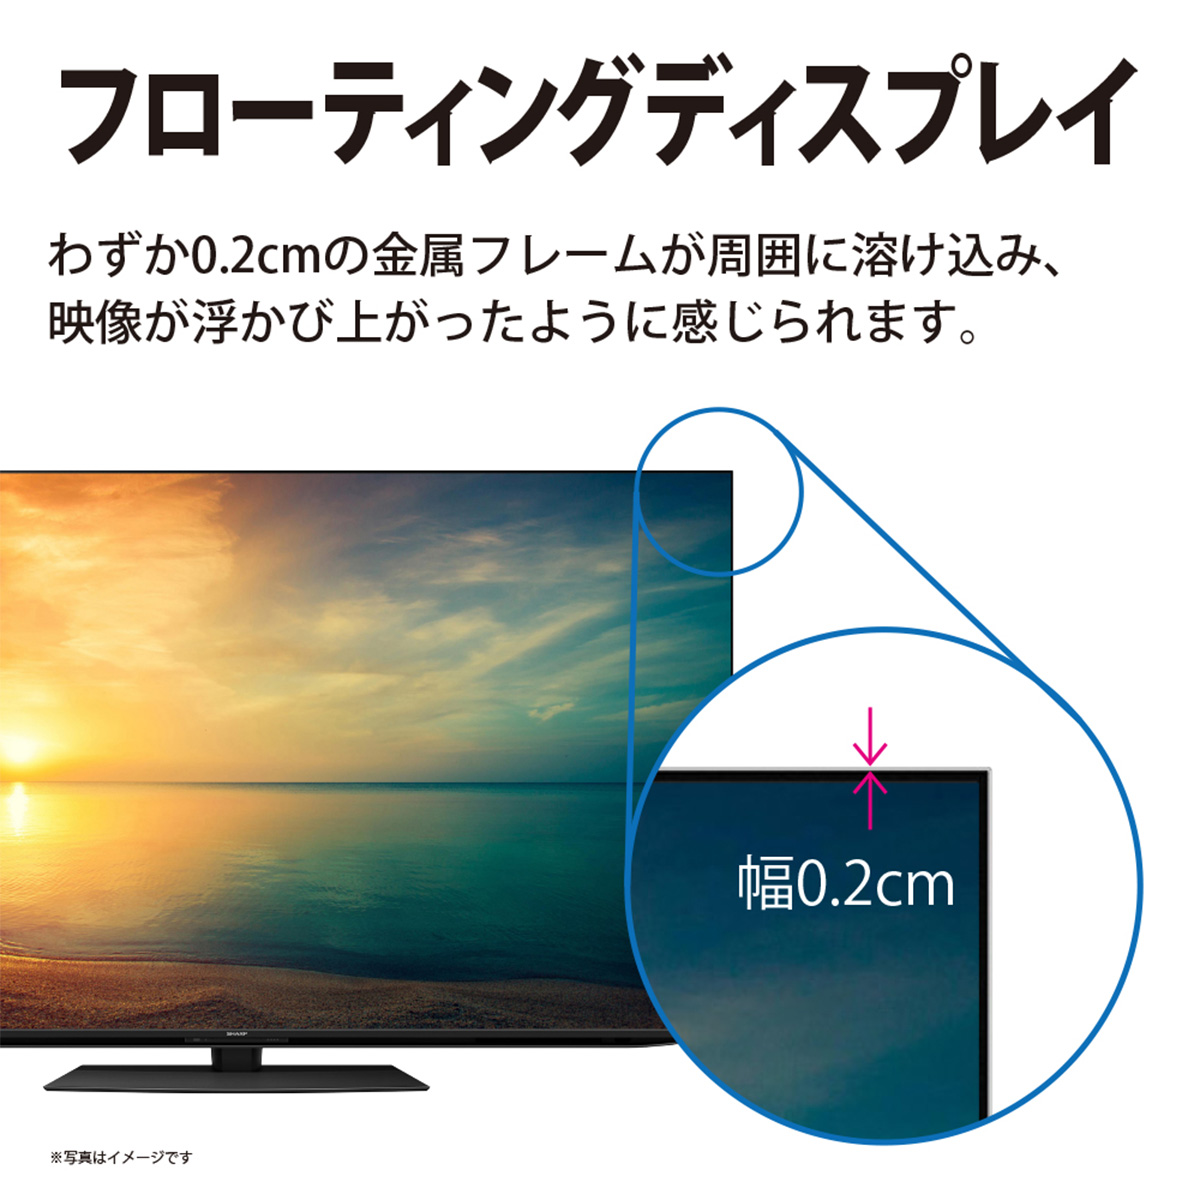 AQUOS DP1ライン 55V型4K液晶テレビ　4KBS/CSチューナー内蔵【大型商品（設置工事可）】